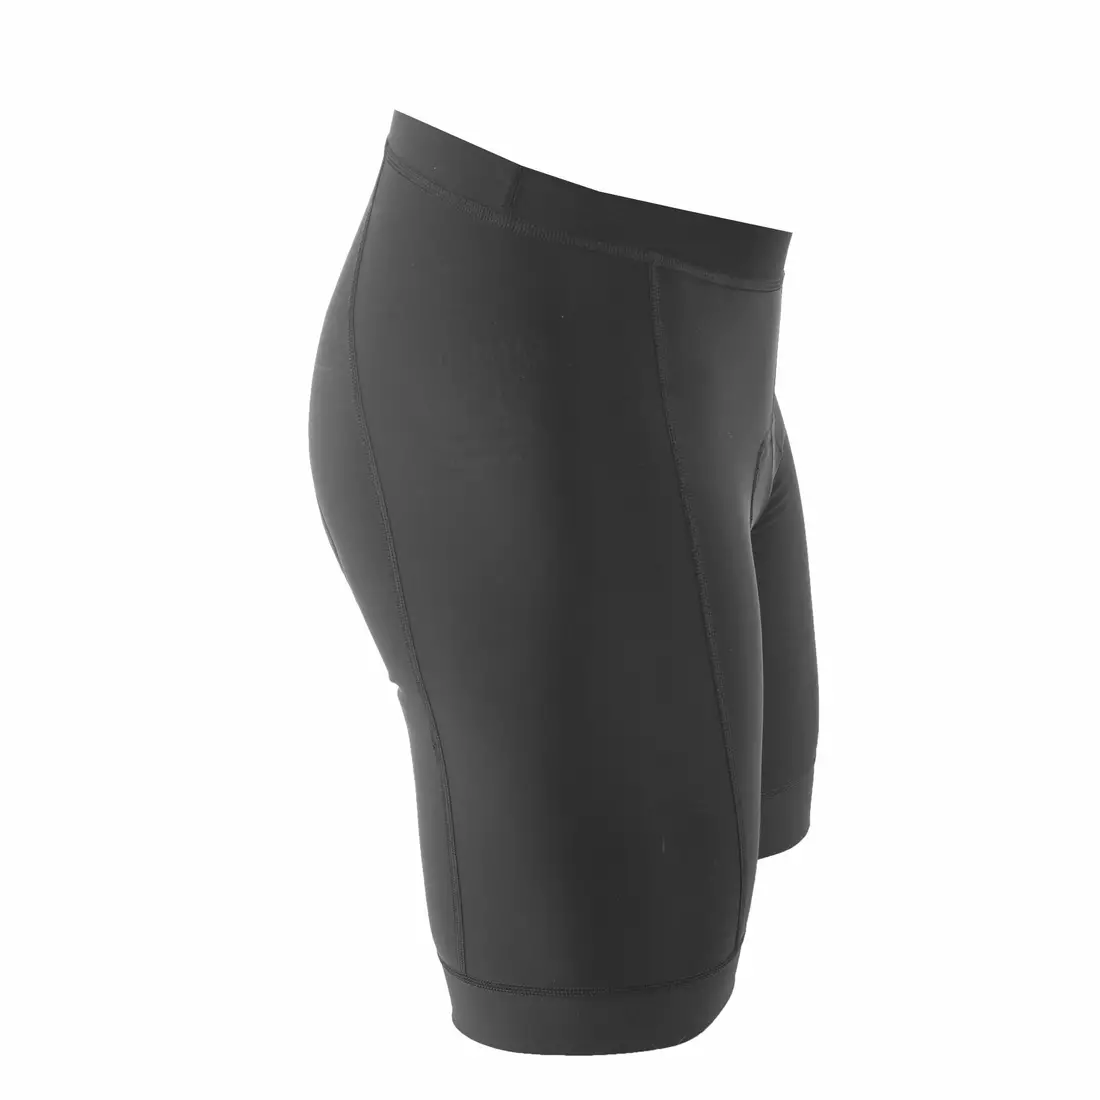 KAYMAQ cycling shorts men black ELSHORM701